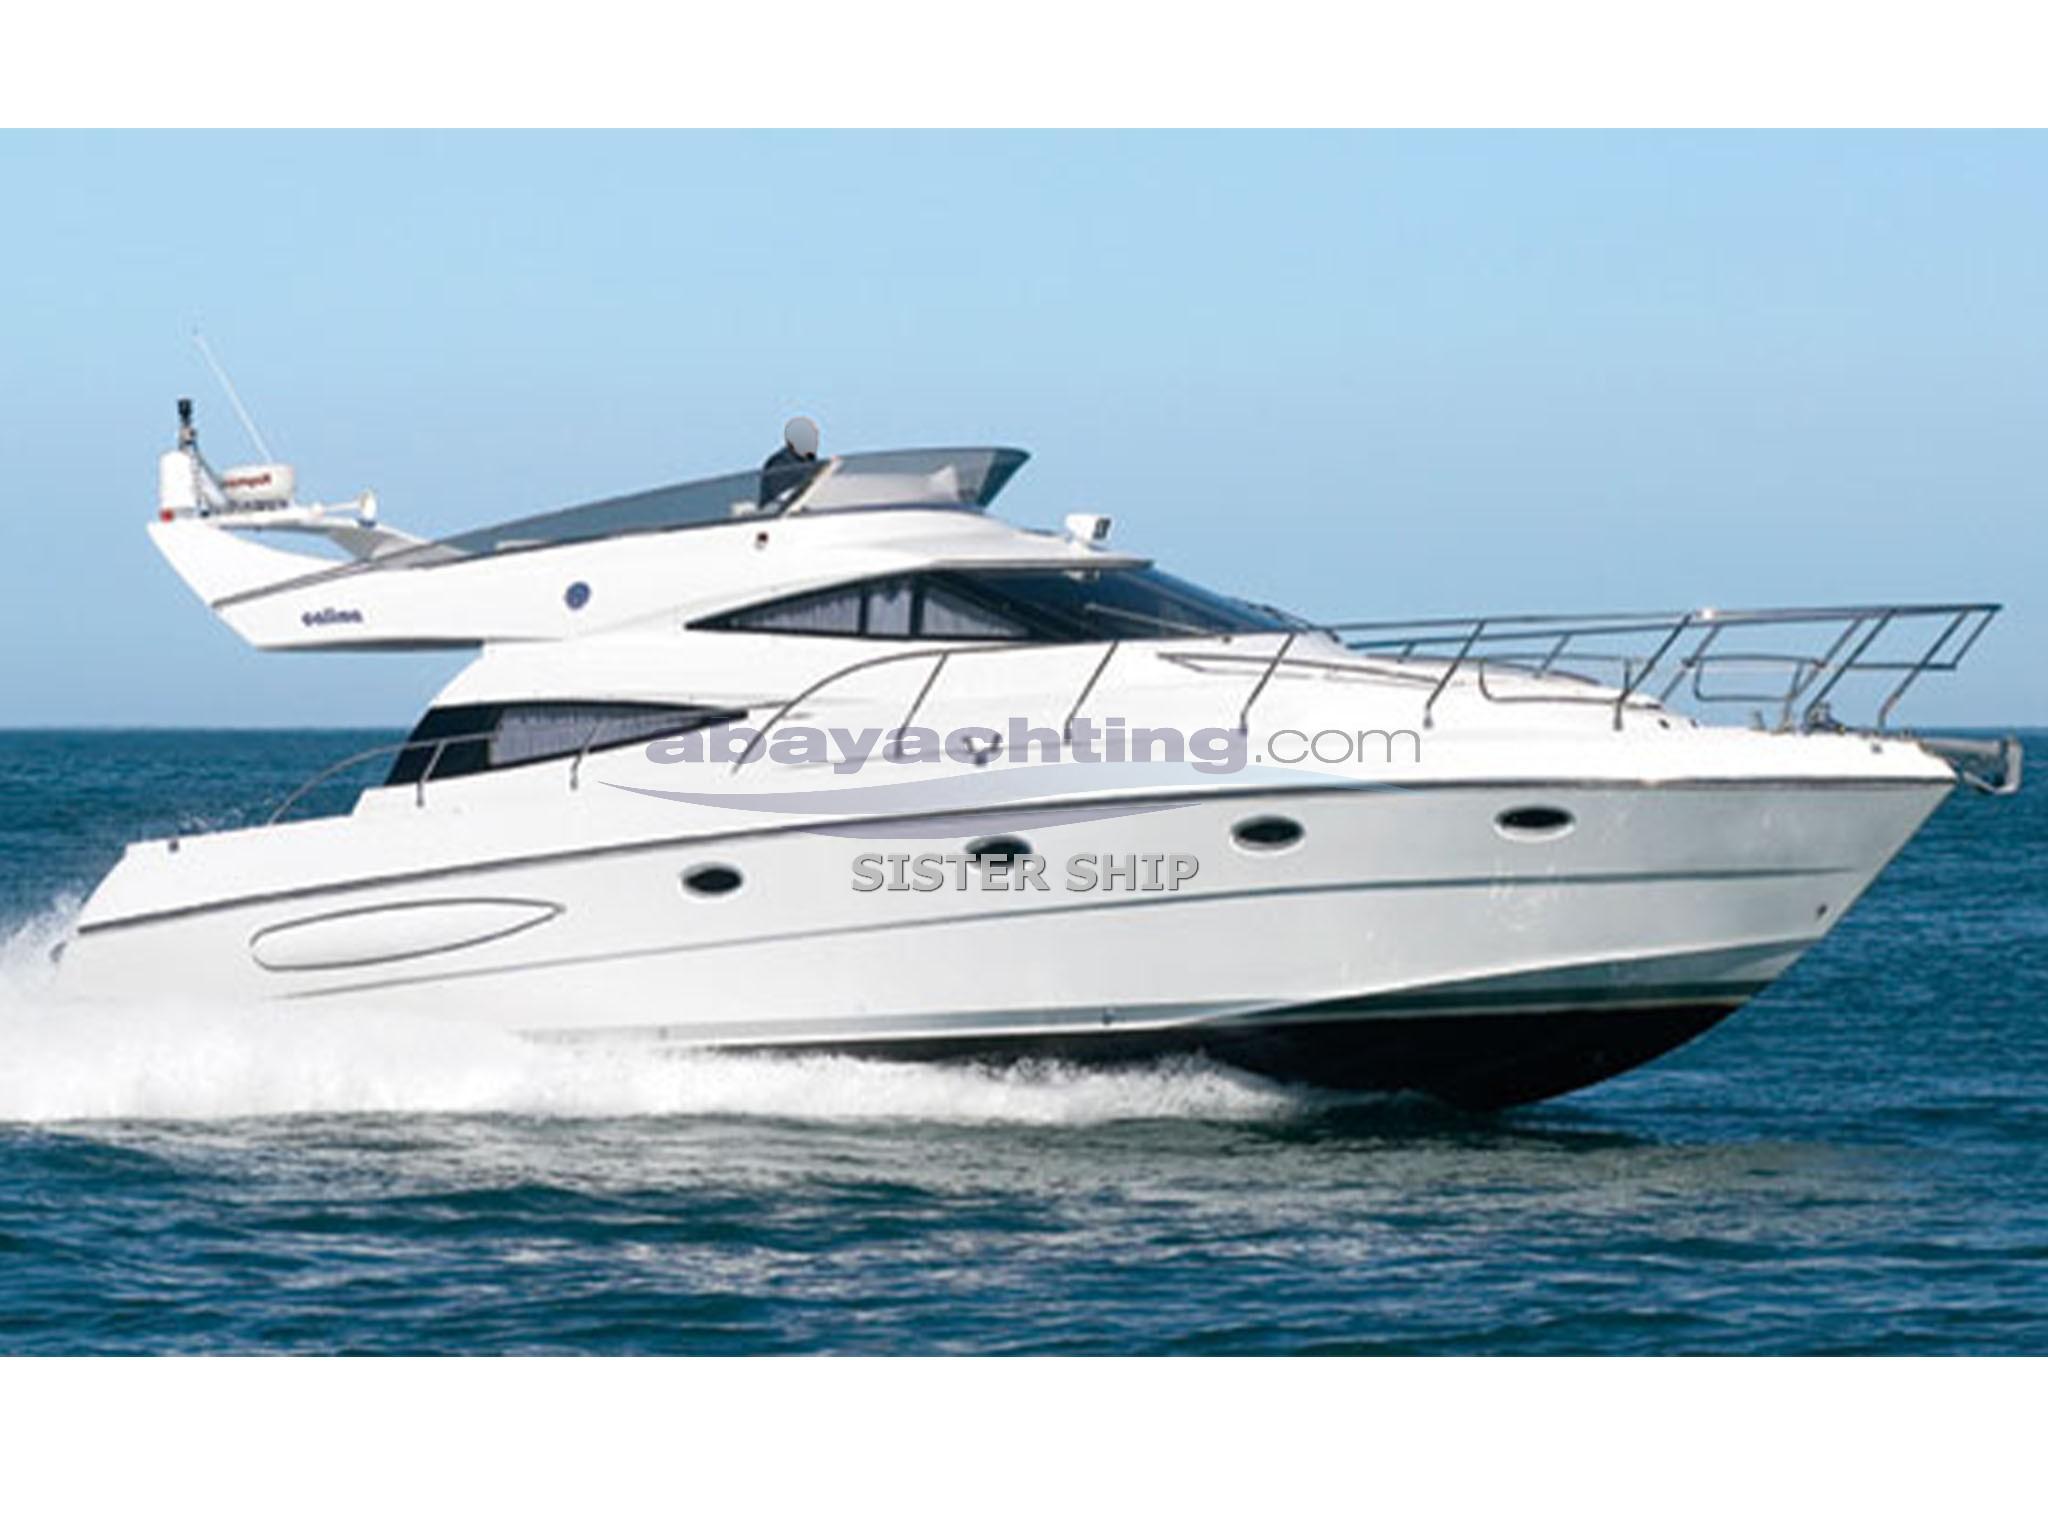 raffaelli yachts for sale